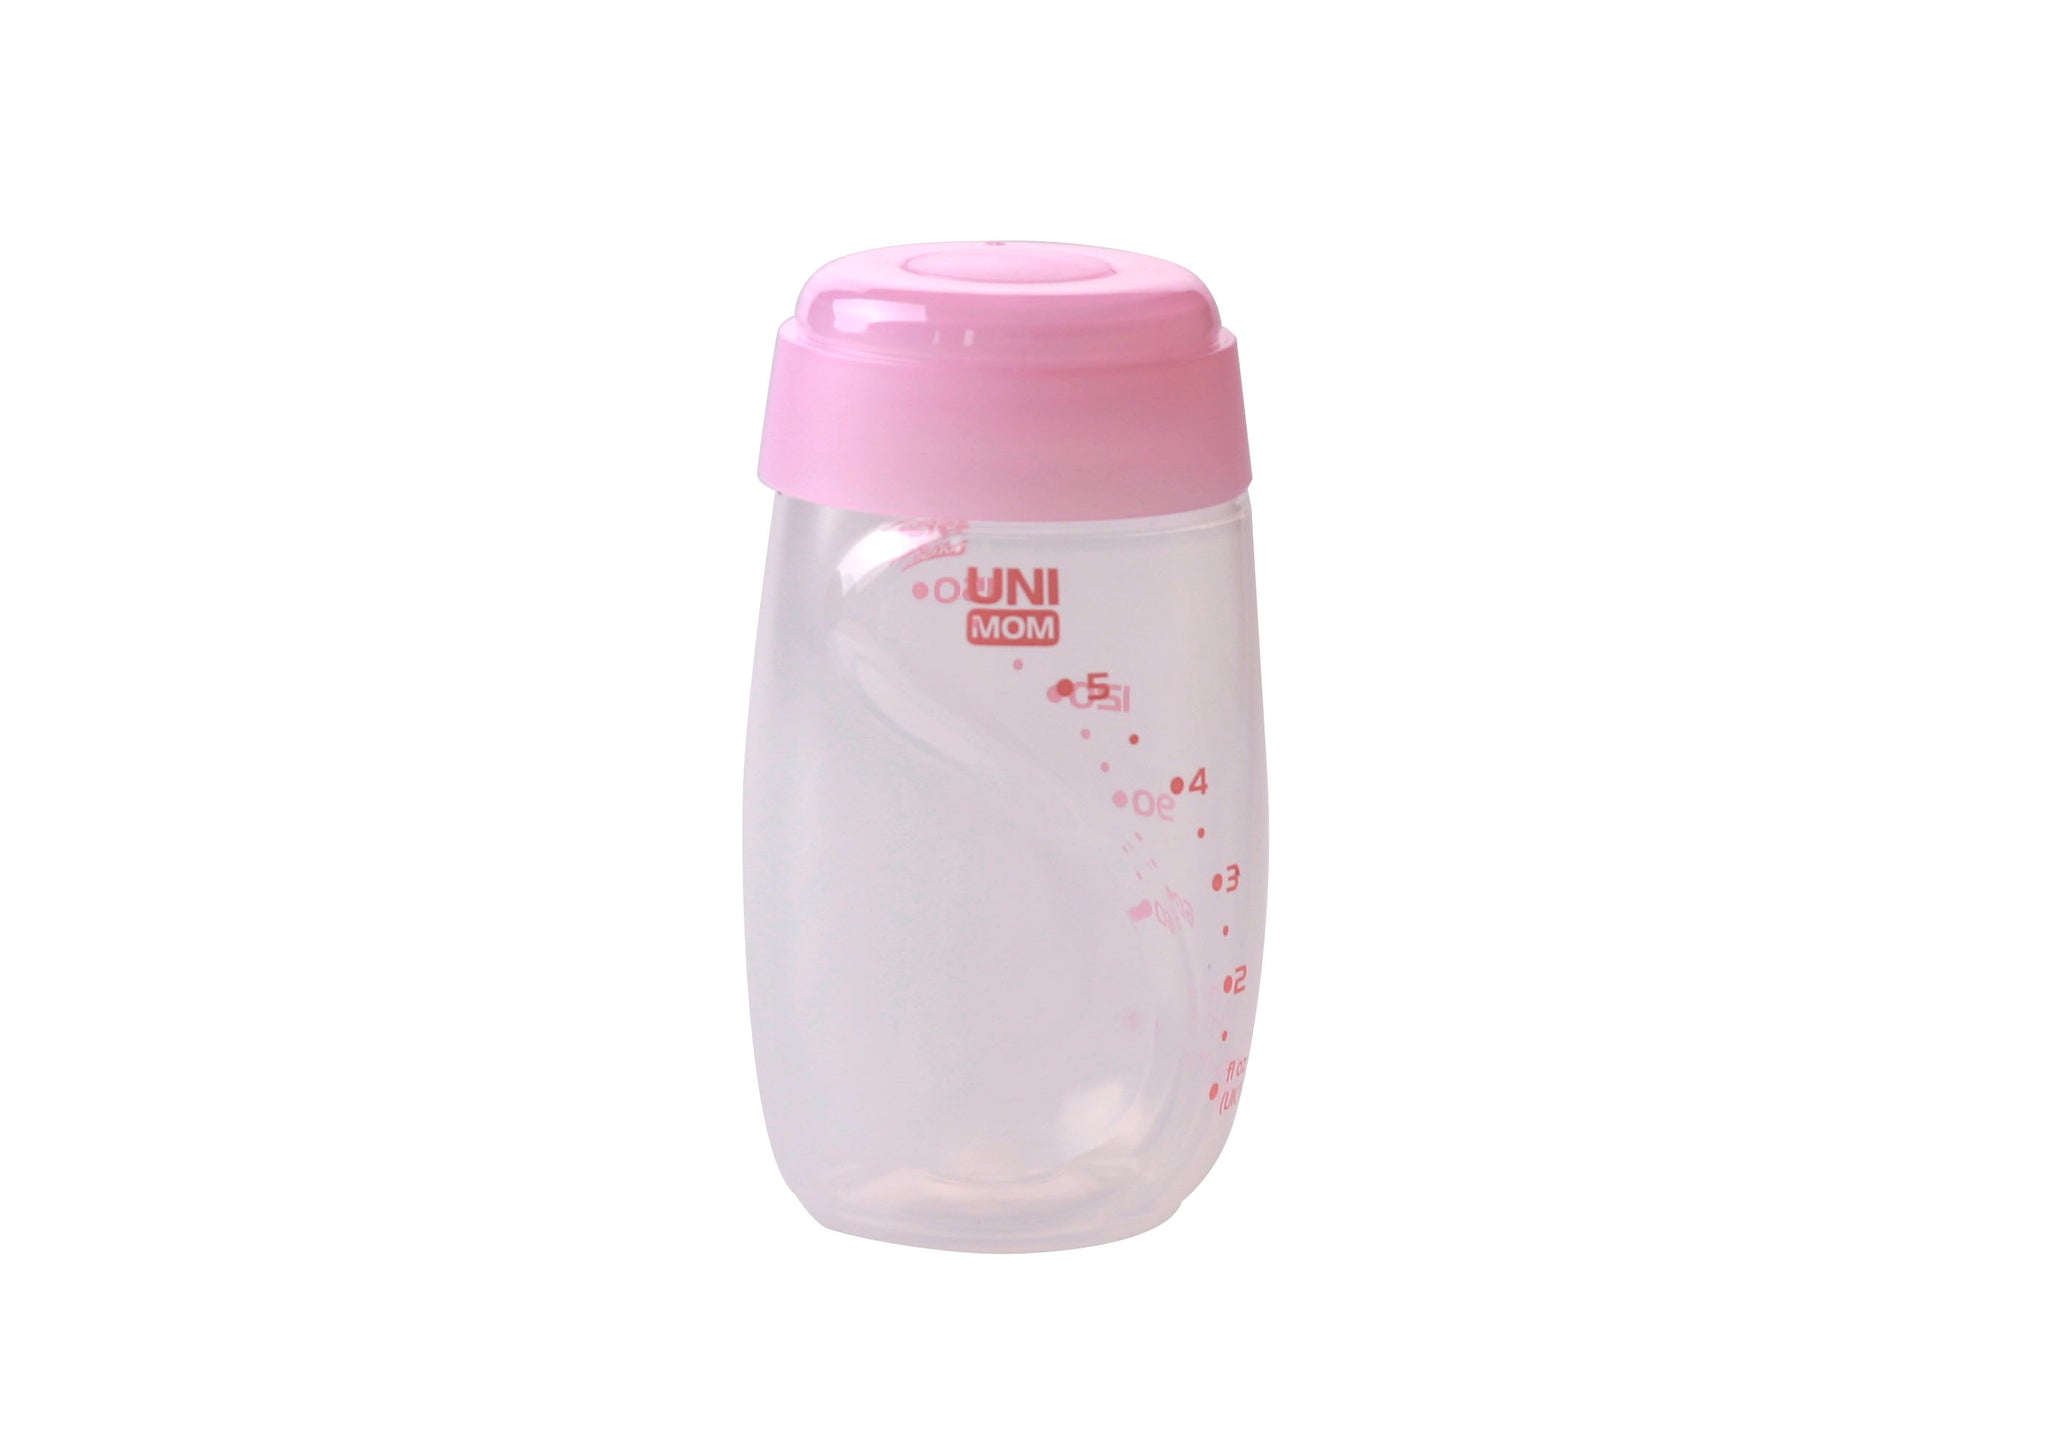 Breast milk storage bottles, Breastfeeding bottles